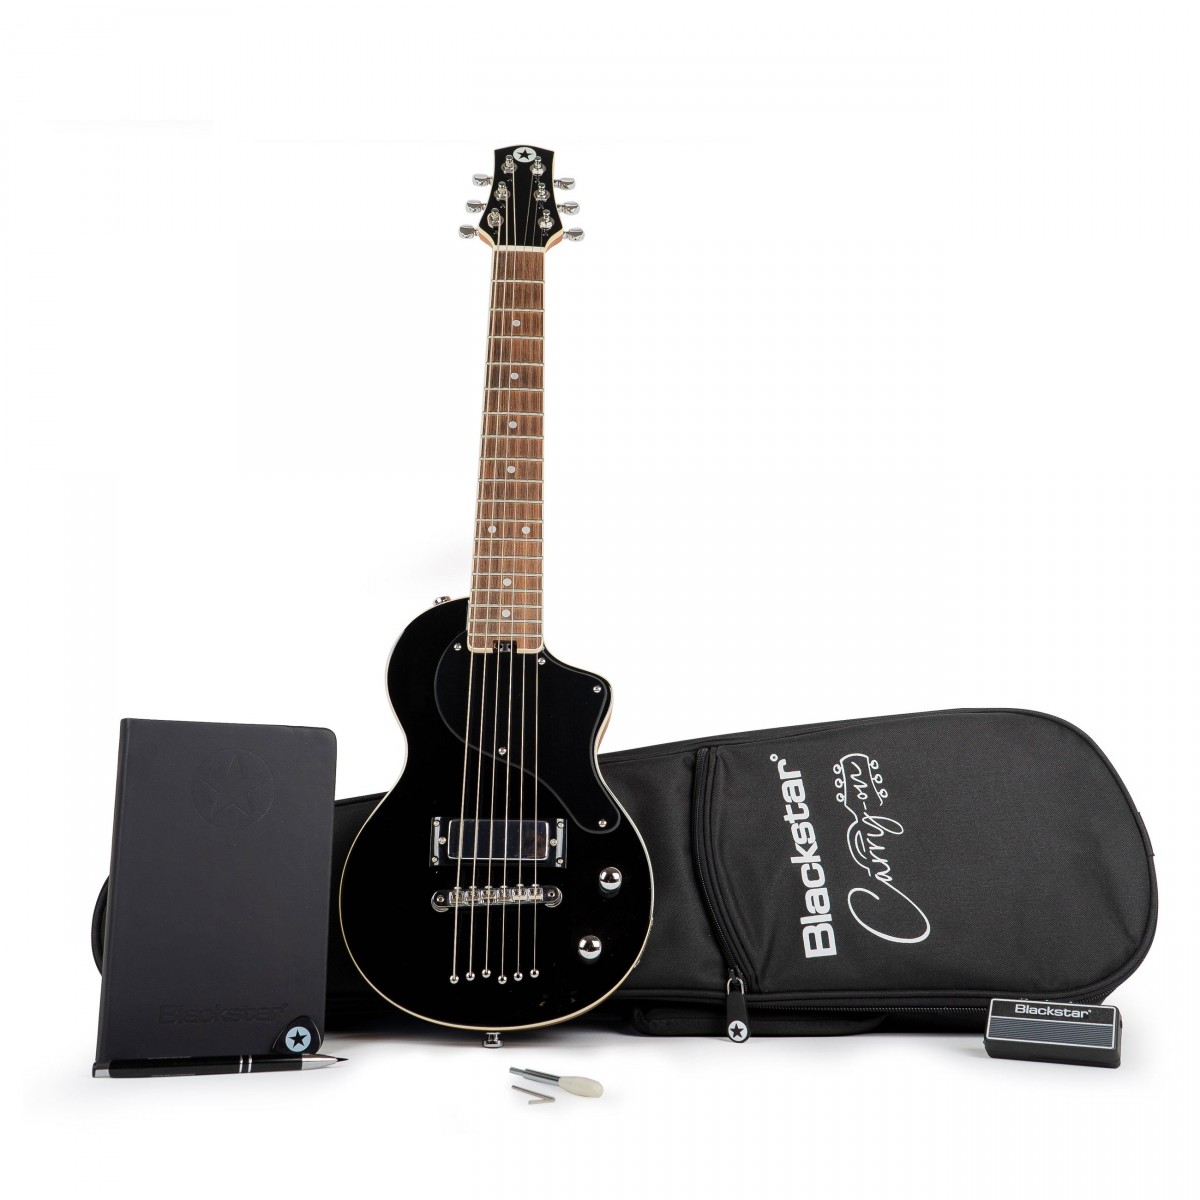 Blackstar Carry-on Travel Guitar Pack JB